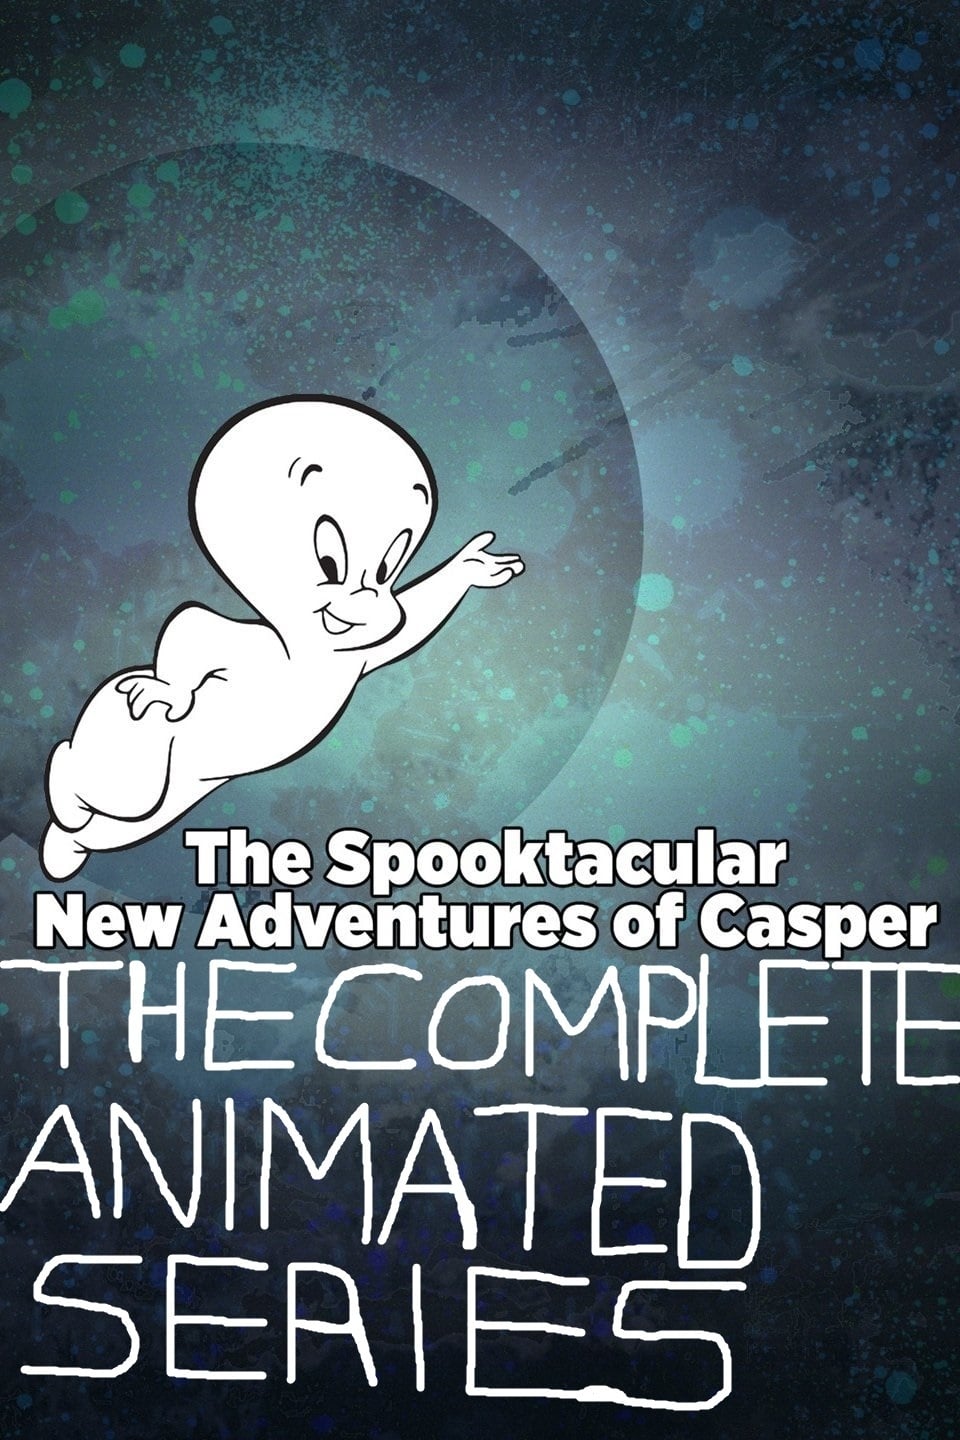 The Spooktacular New Adventures of Casper (1996)